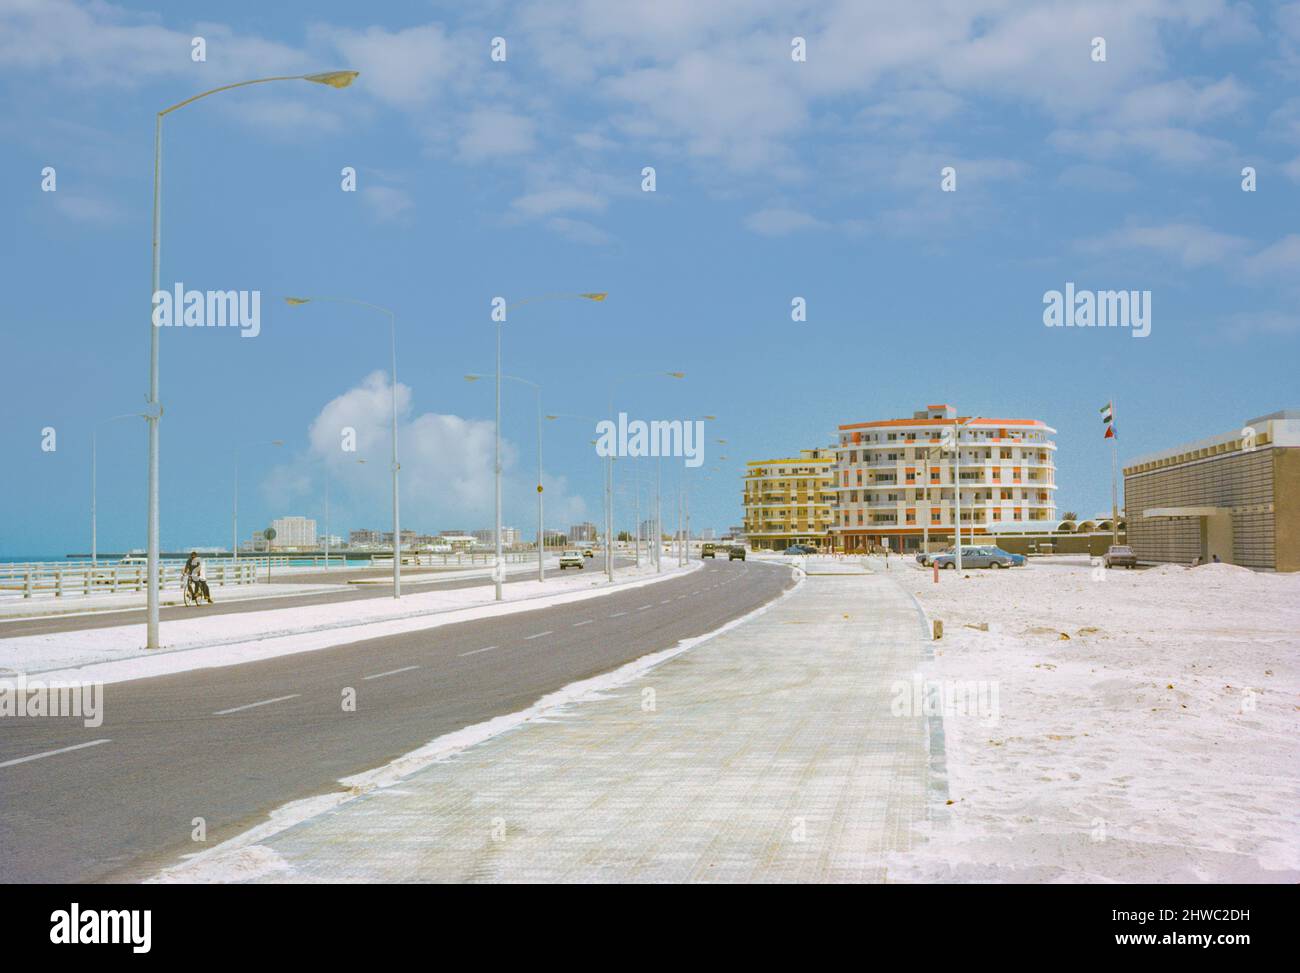 Abu Dhabi, UAE.  Corniche Street Scene. Persian (Arabian) Gulf off to left side. Abu Dhabi begins its modern development. Photographed March 1972. Stock Photo